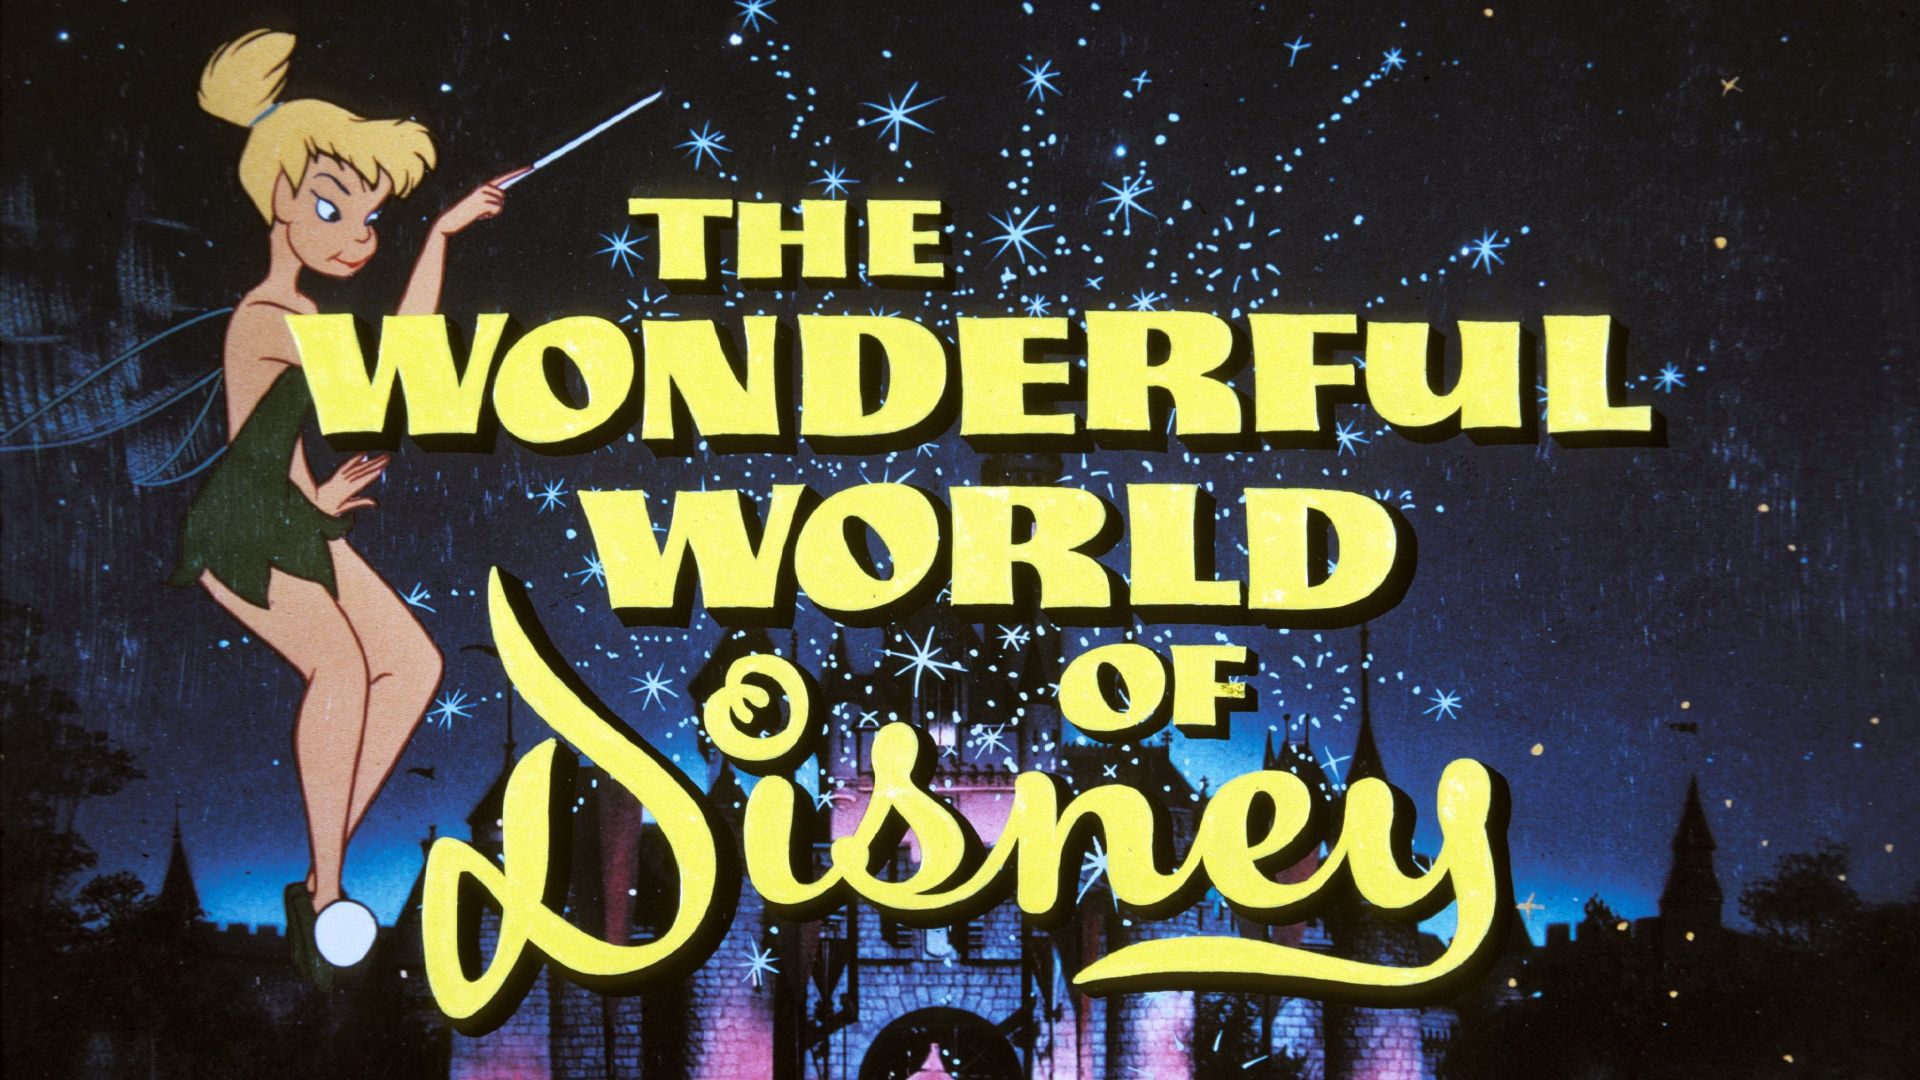 The Wonderful World of Disney Backdrop